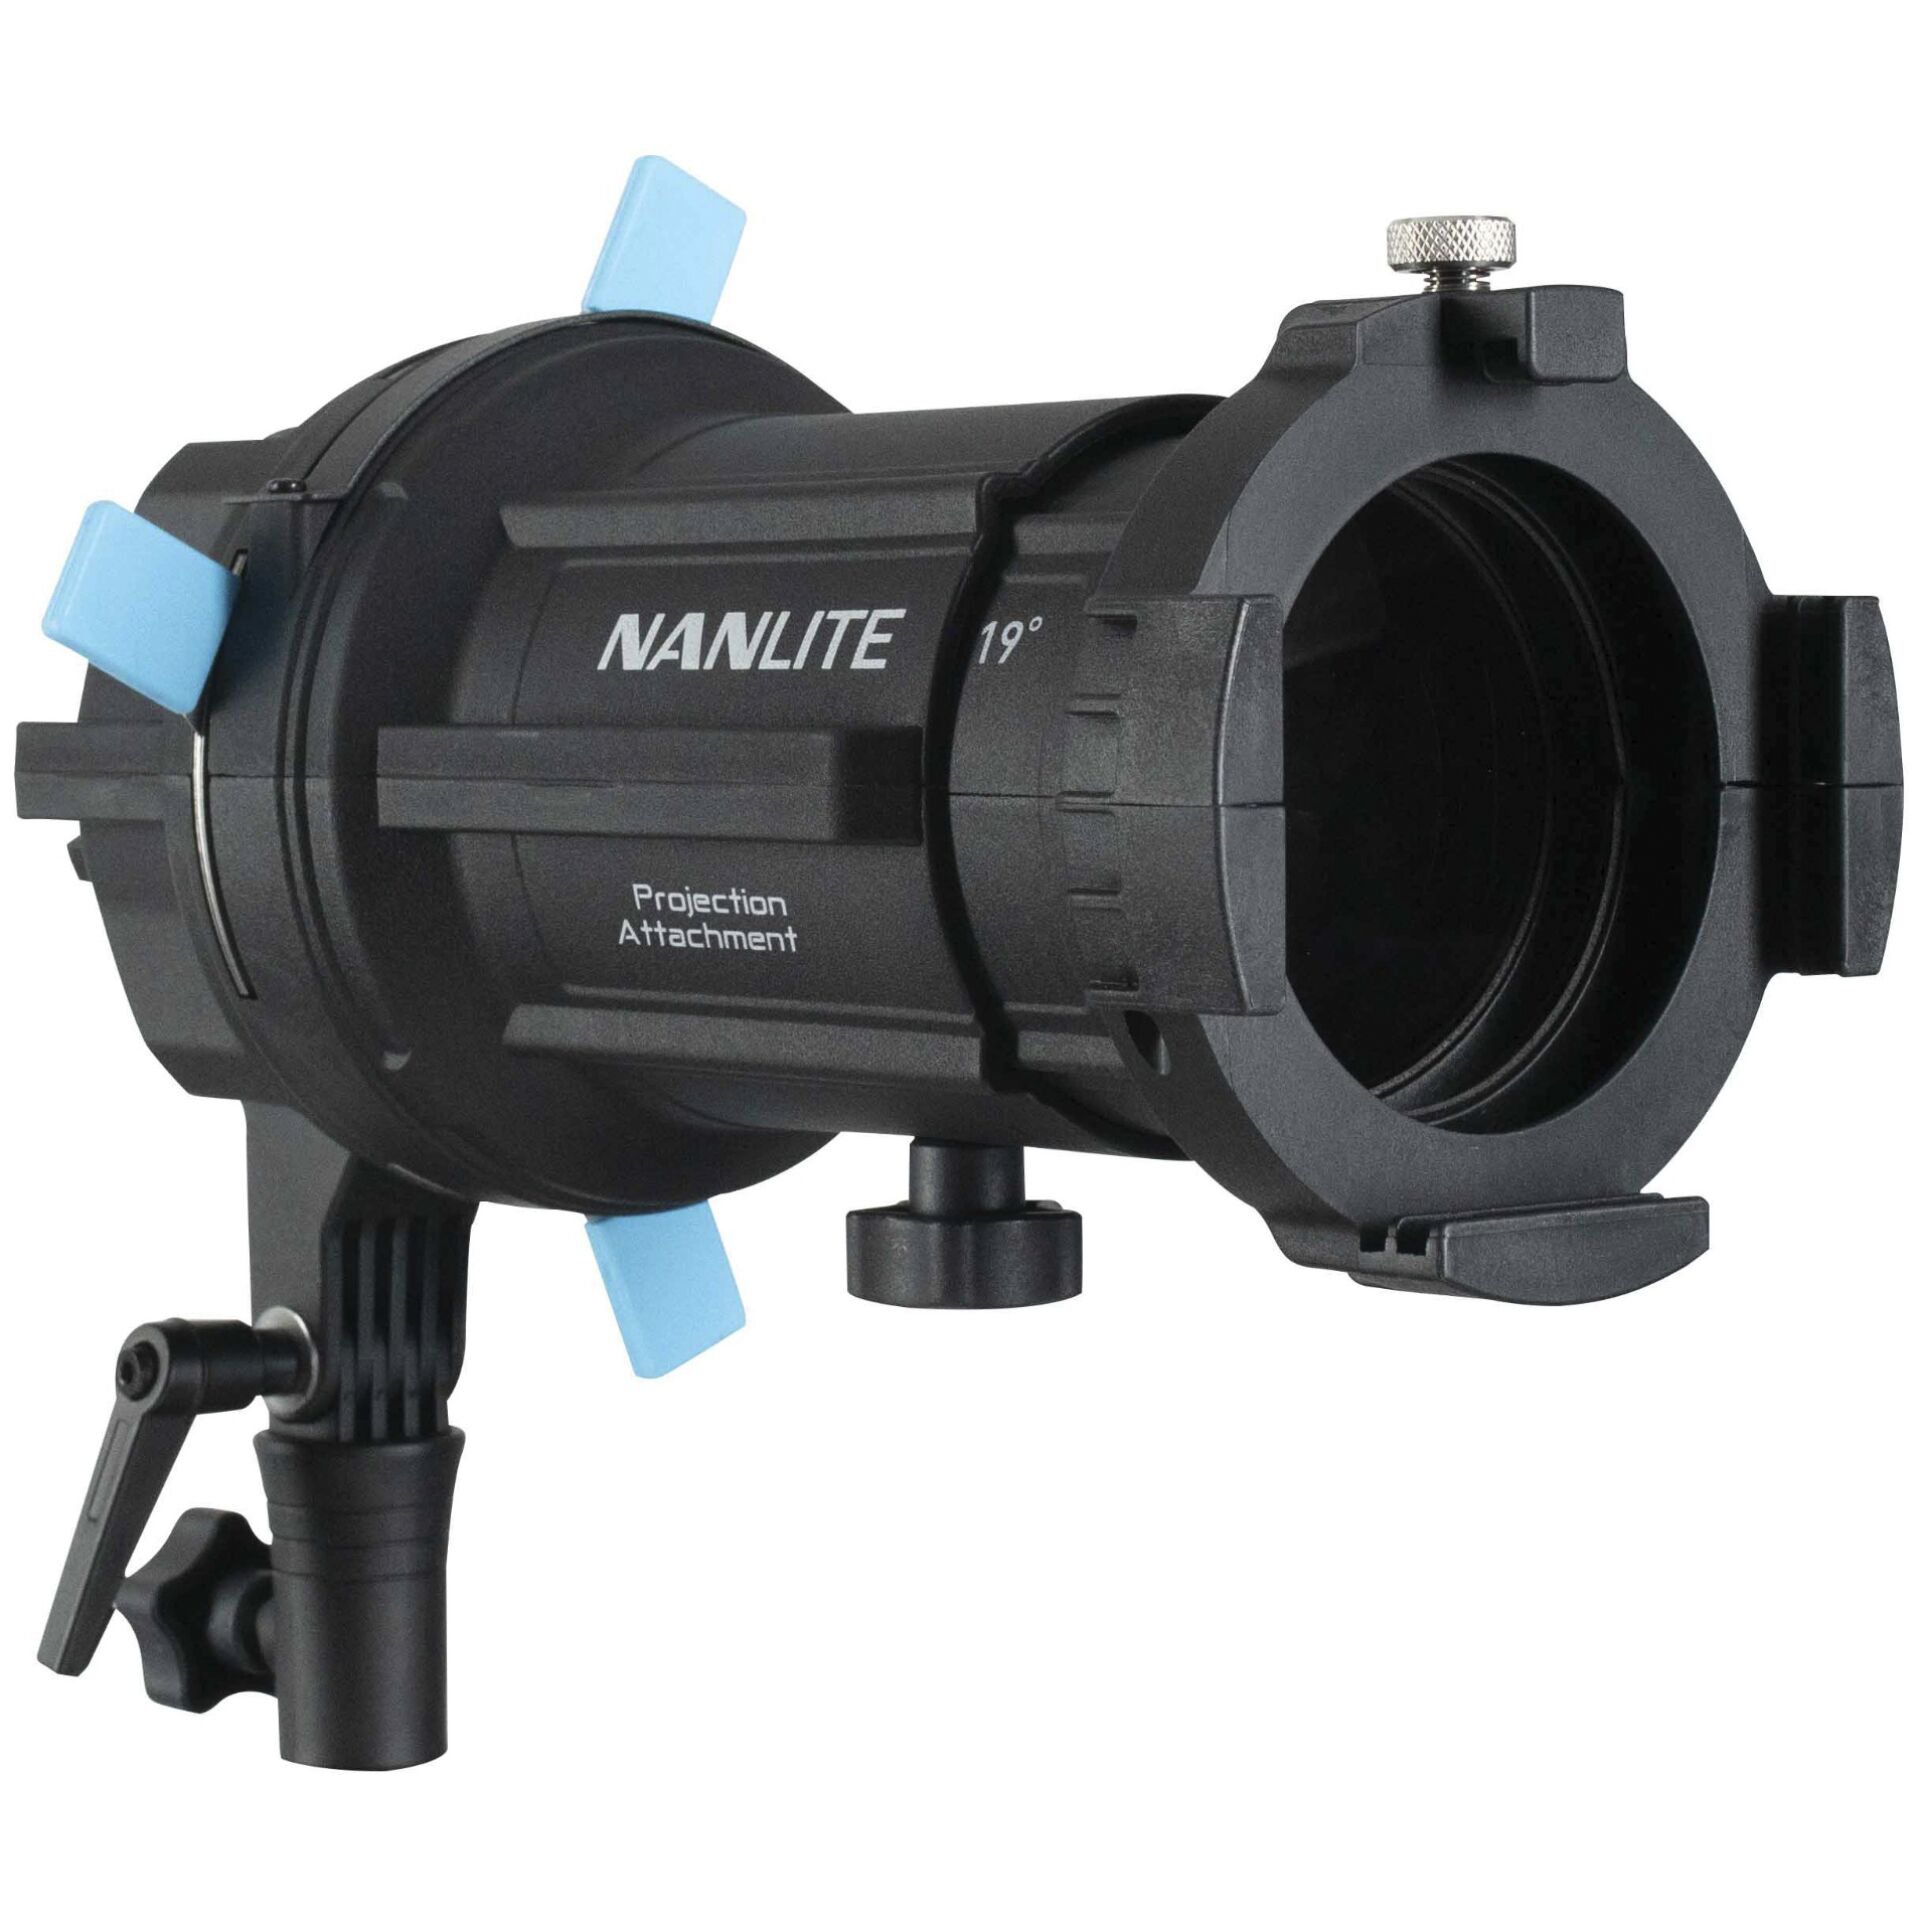 Nanlite PJ-FZ60-19 Projektions- vorsatz für Forza 60 60B 19°